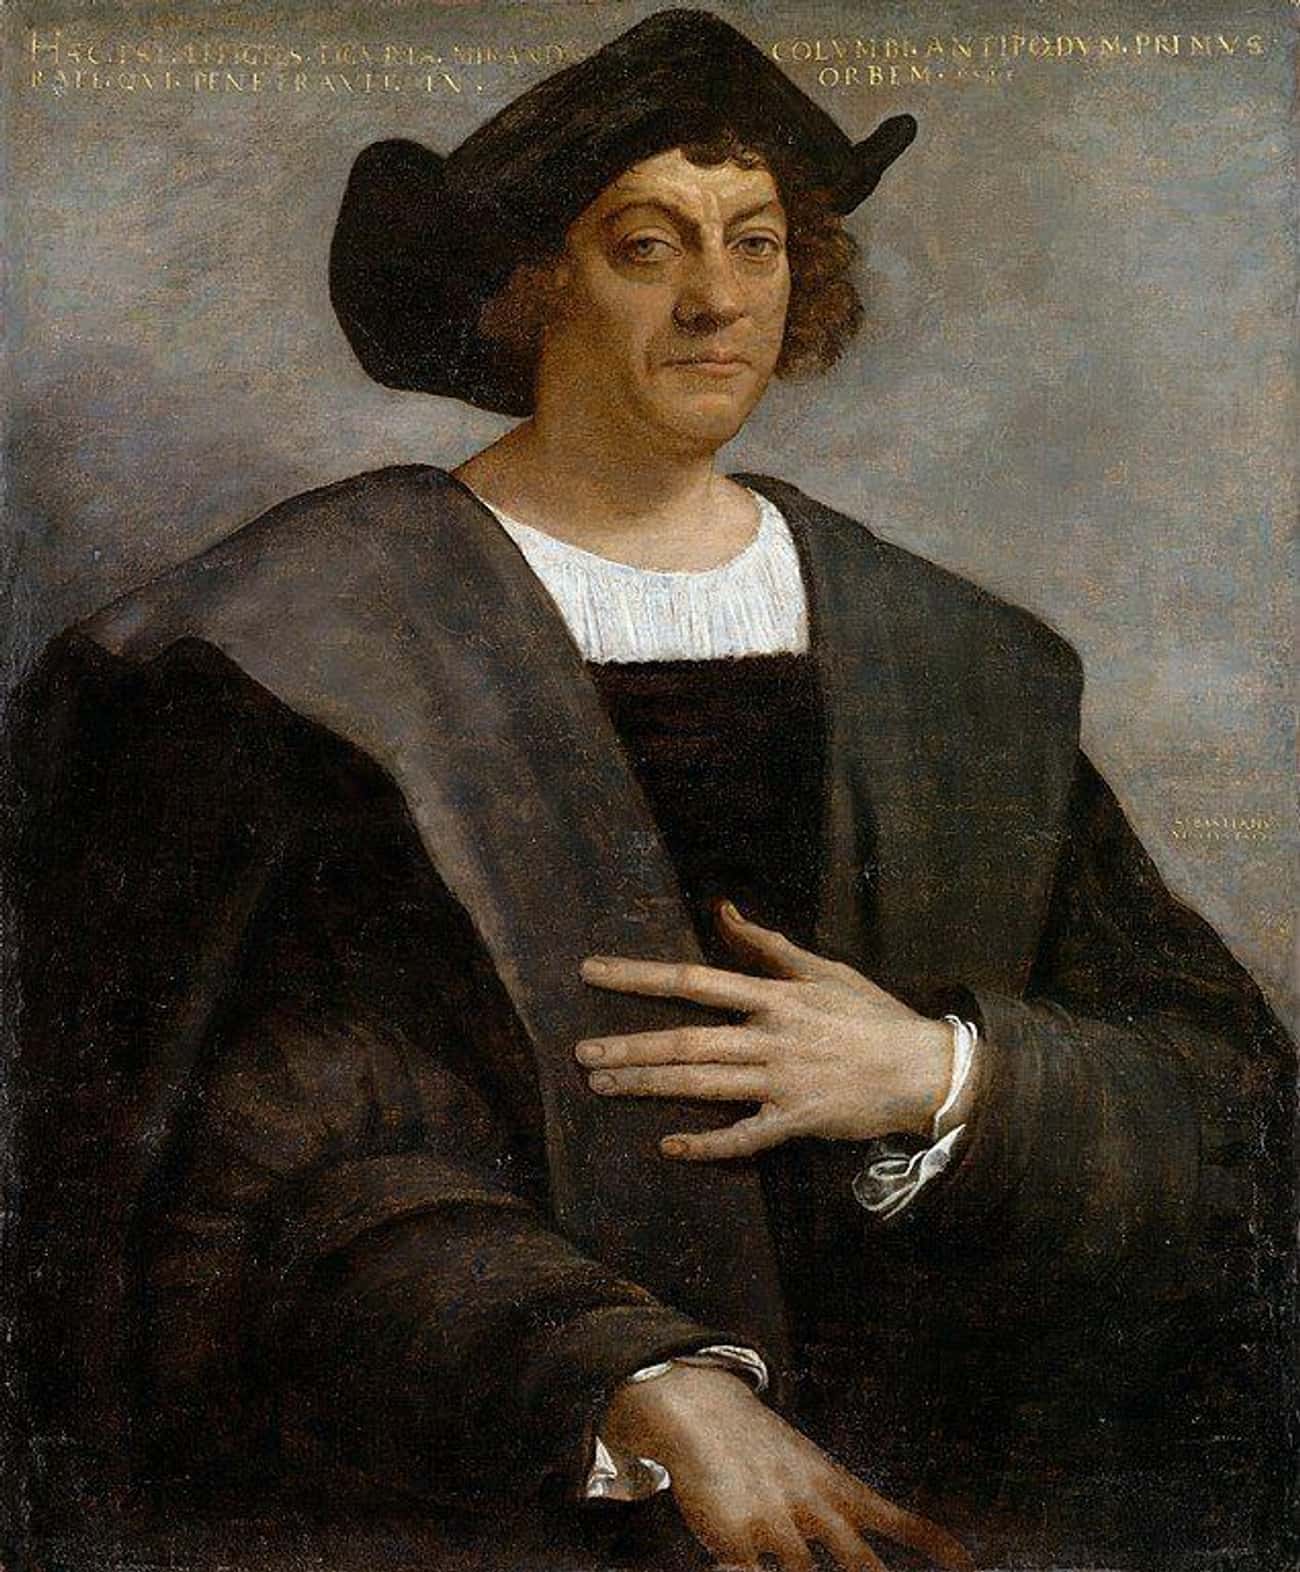 'Christopher Columbus' Wasn't Actually His Name